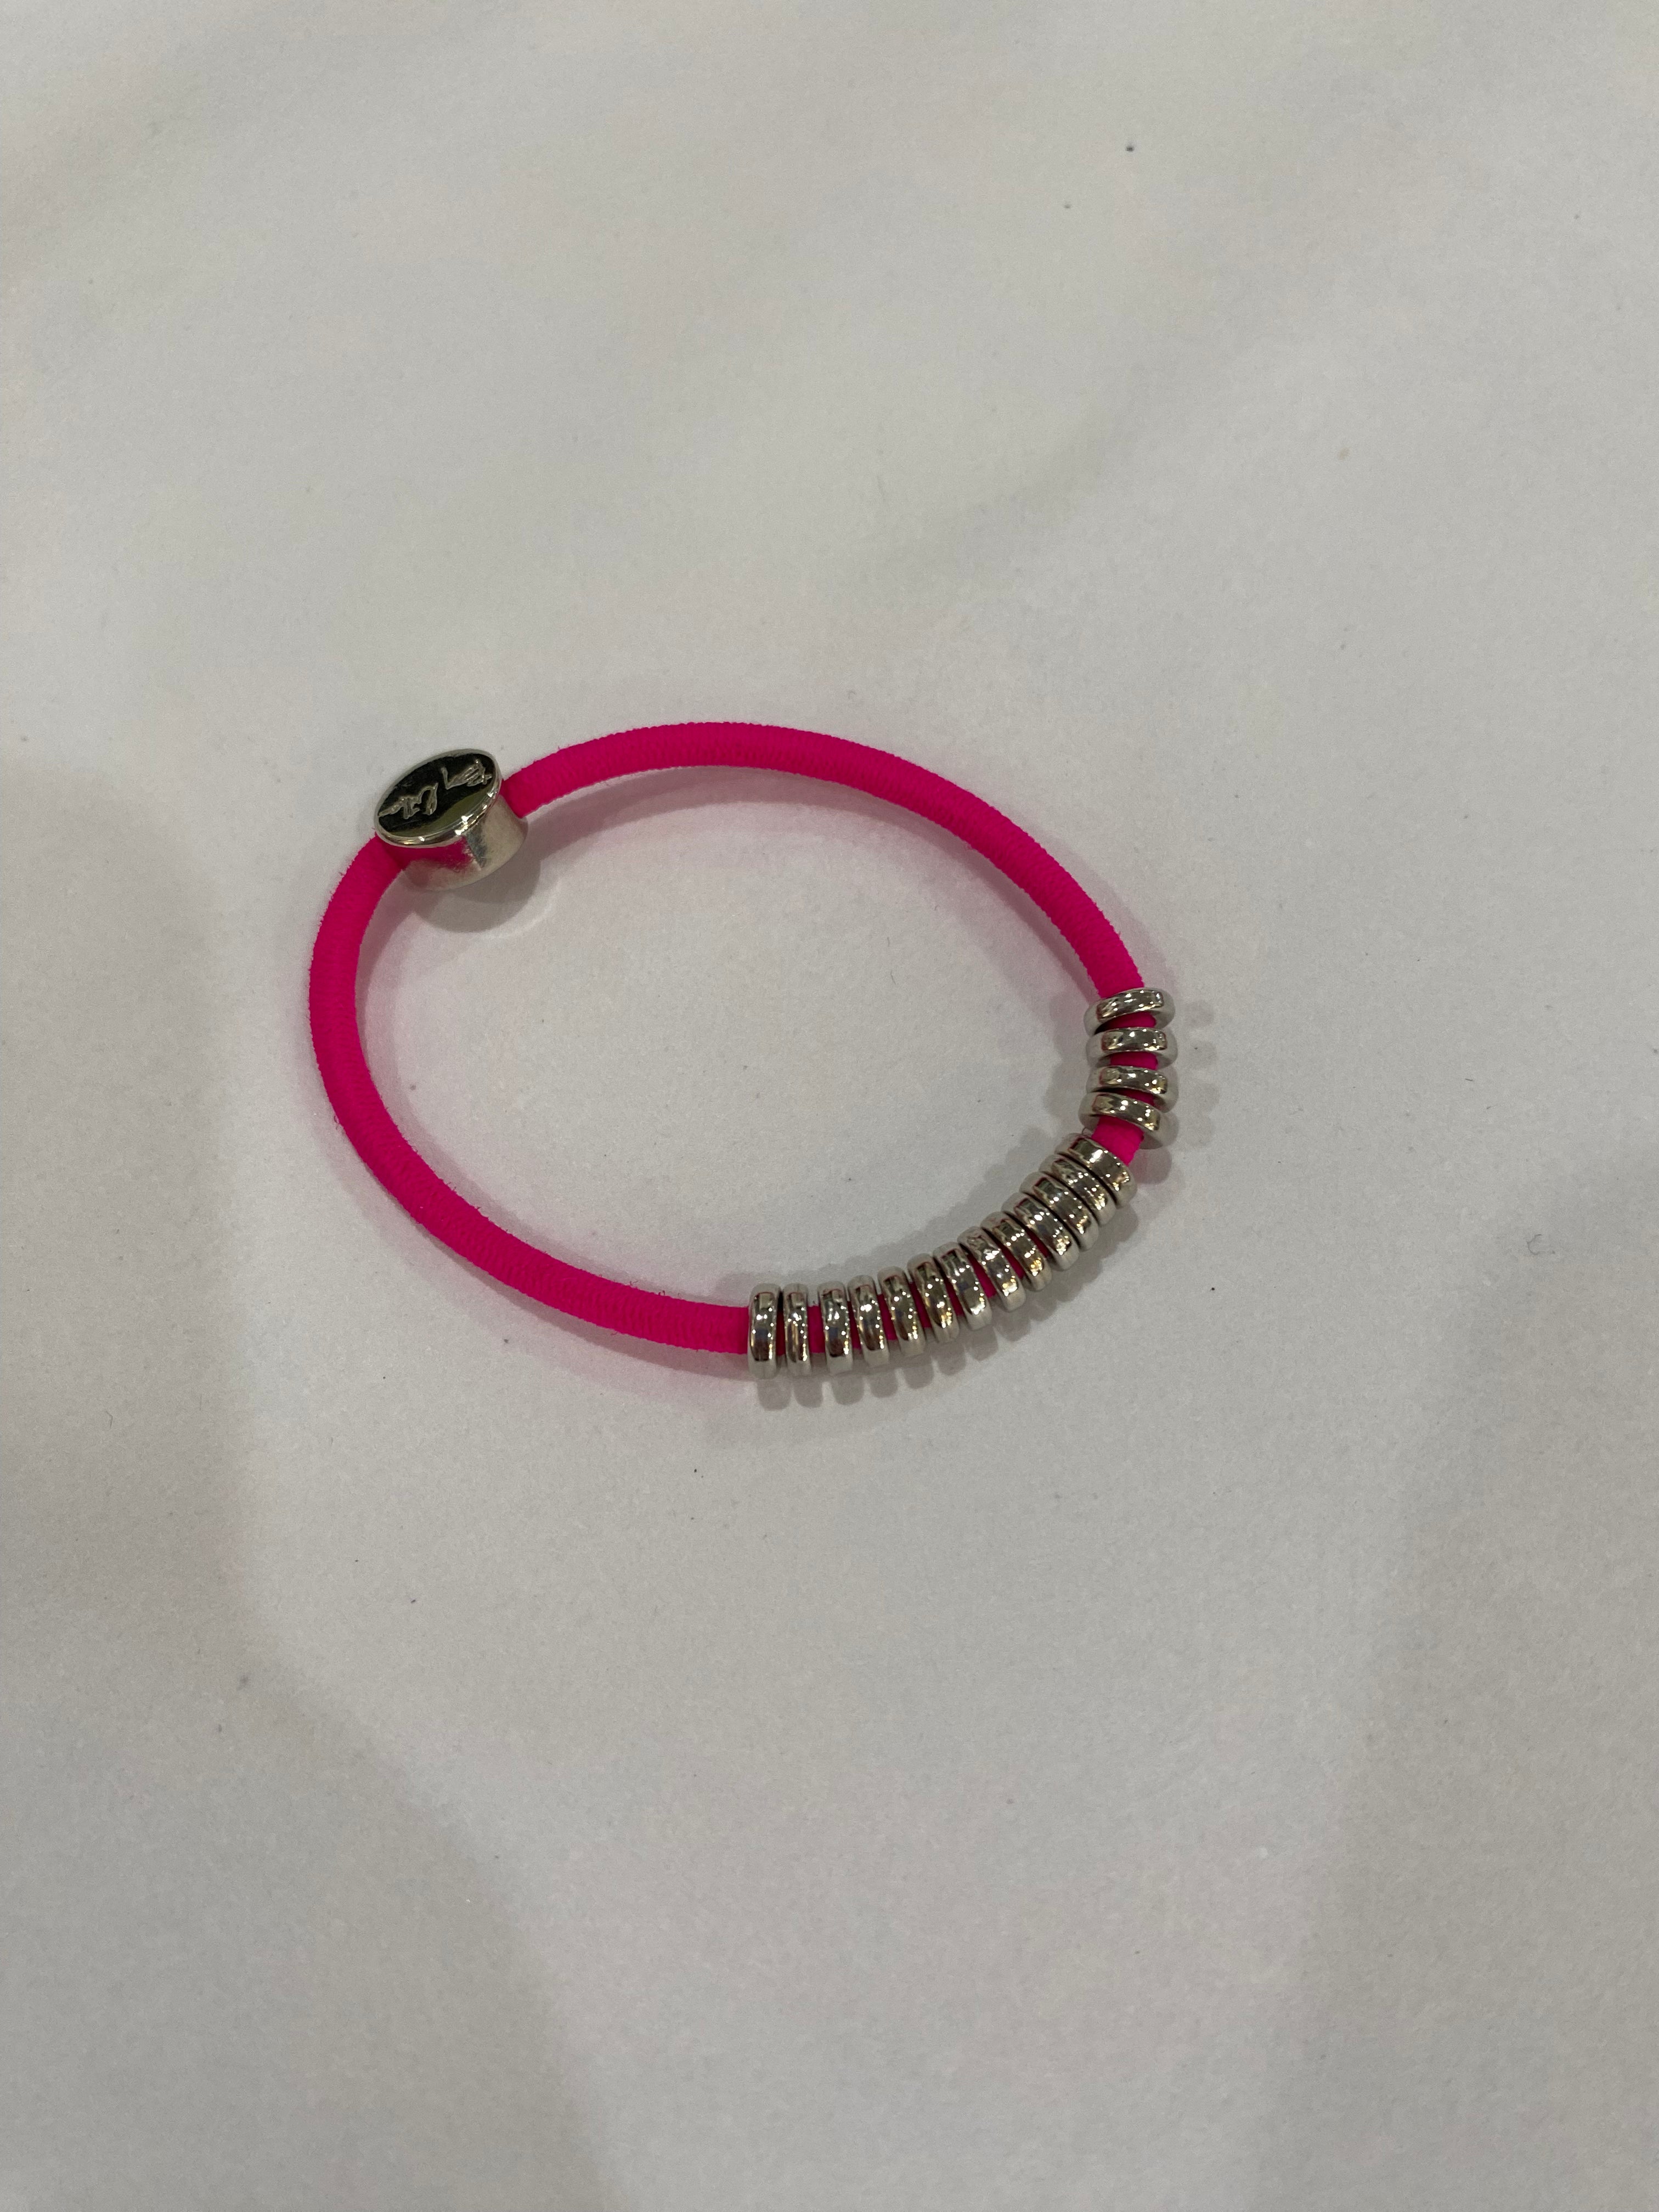 Hot Pink bylilla hair tie bracelet